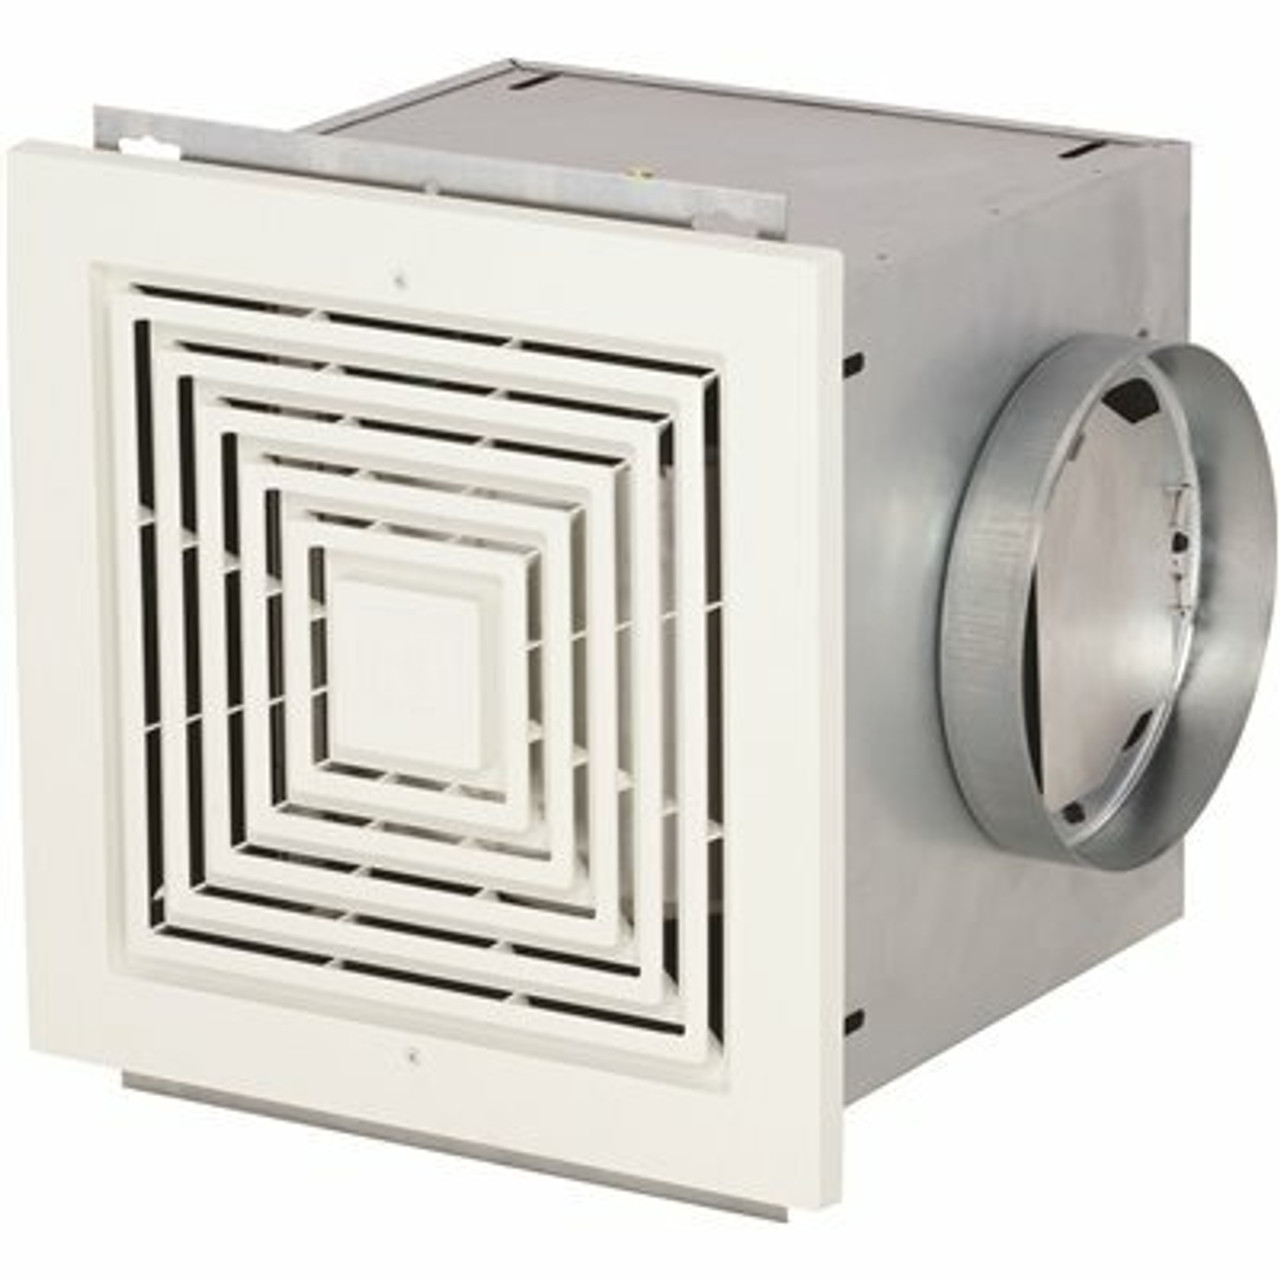 Broan-Nutone 210 Cfm High-Capacity Ventilation Bathroom Exhaust Fan